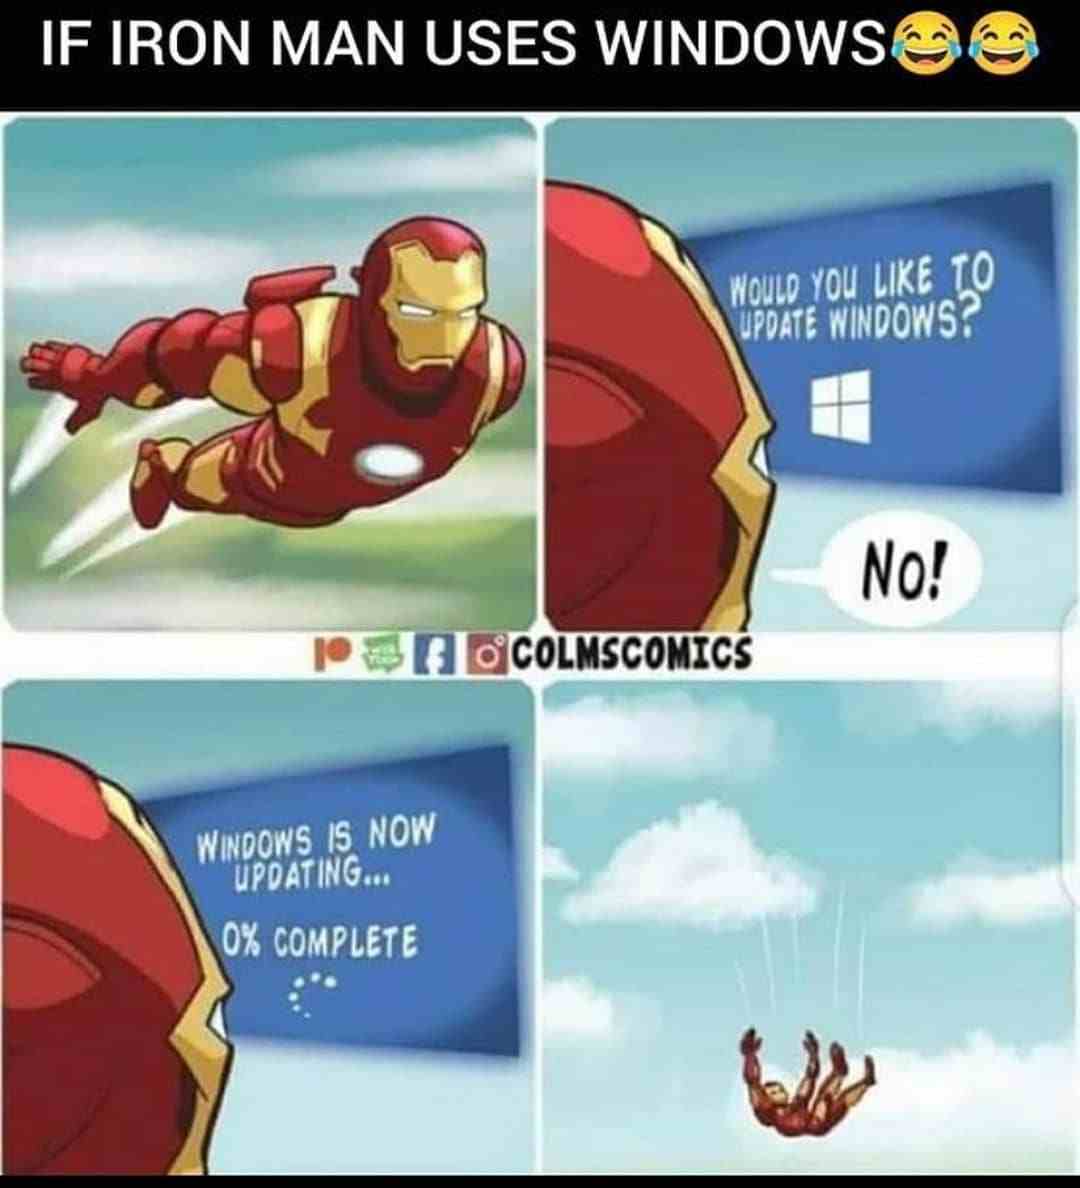 If iron man uses Windows